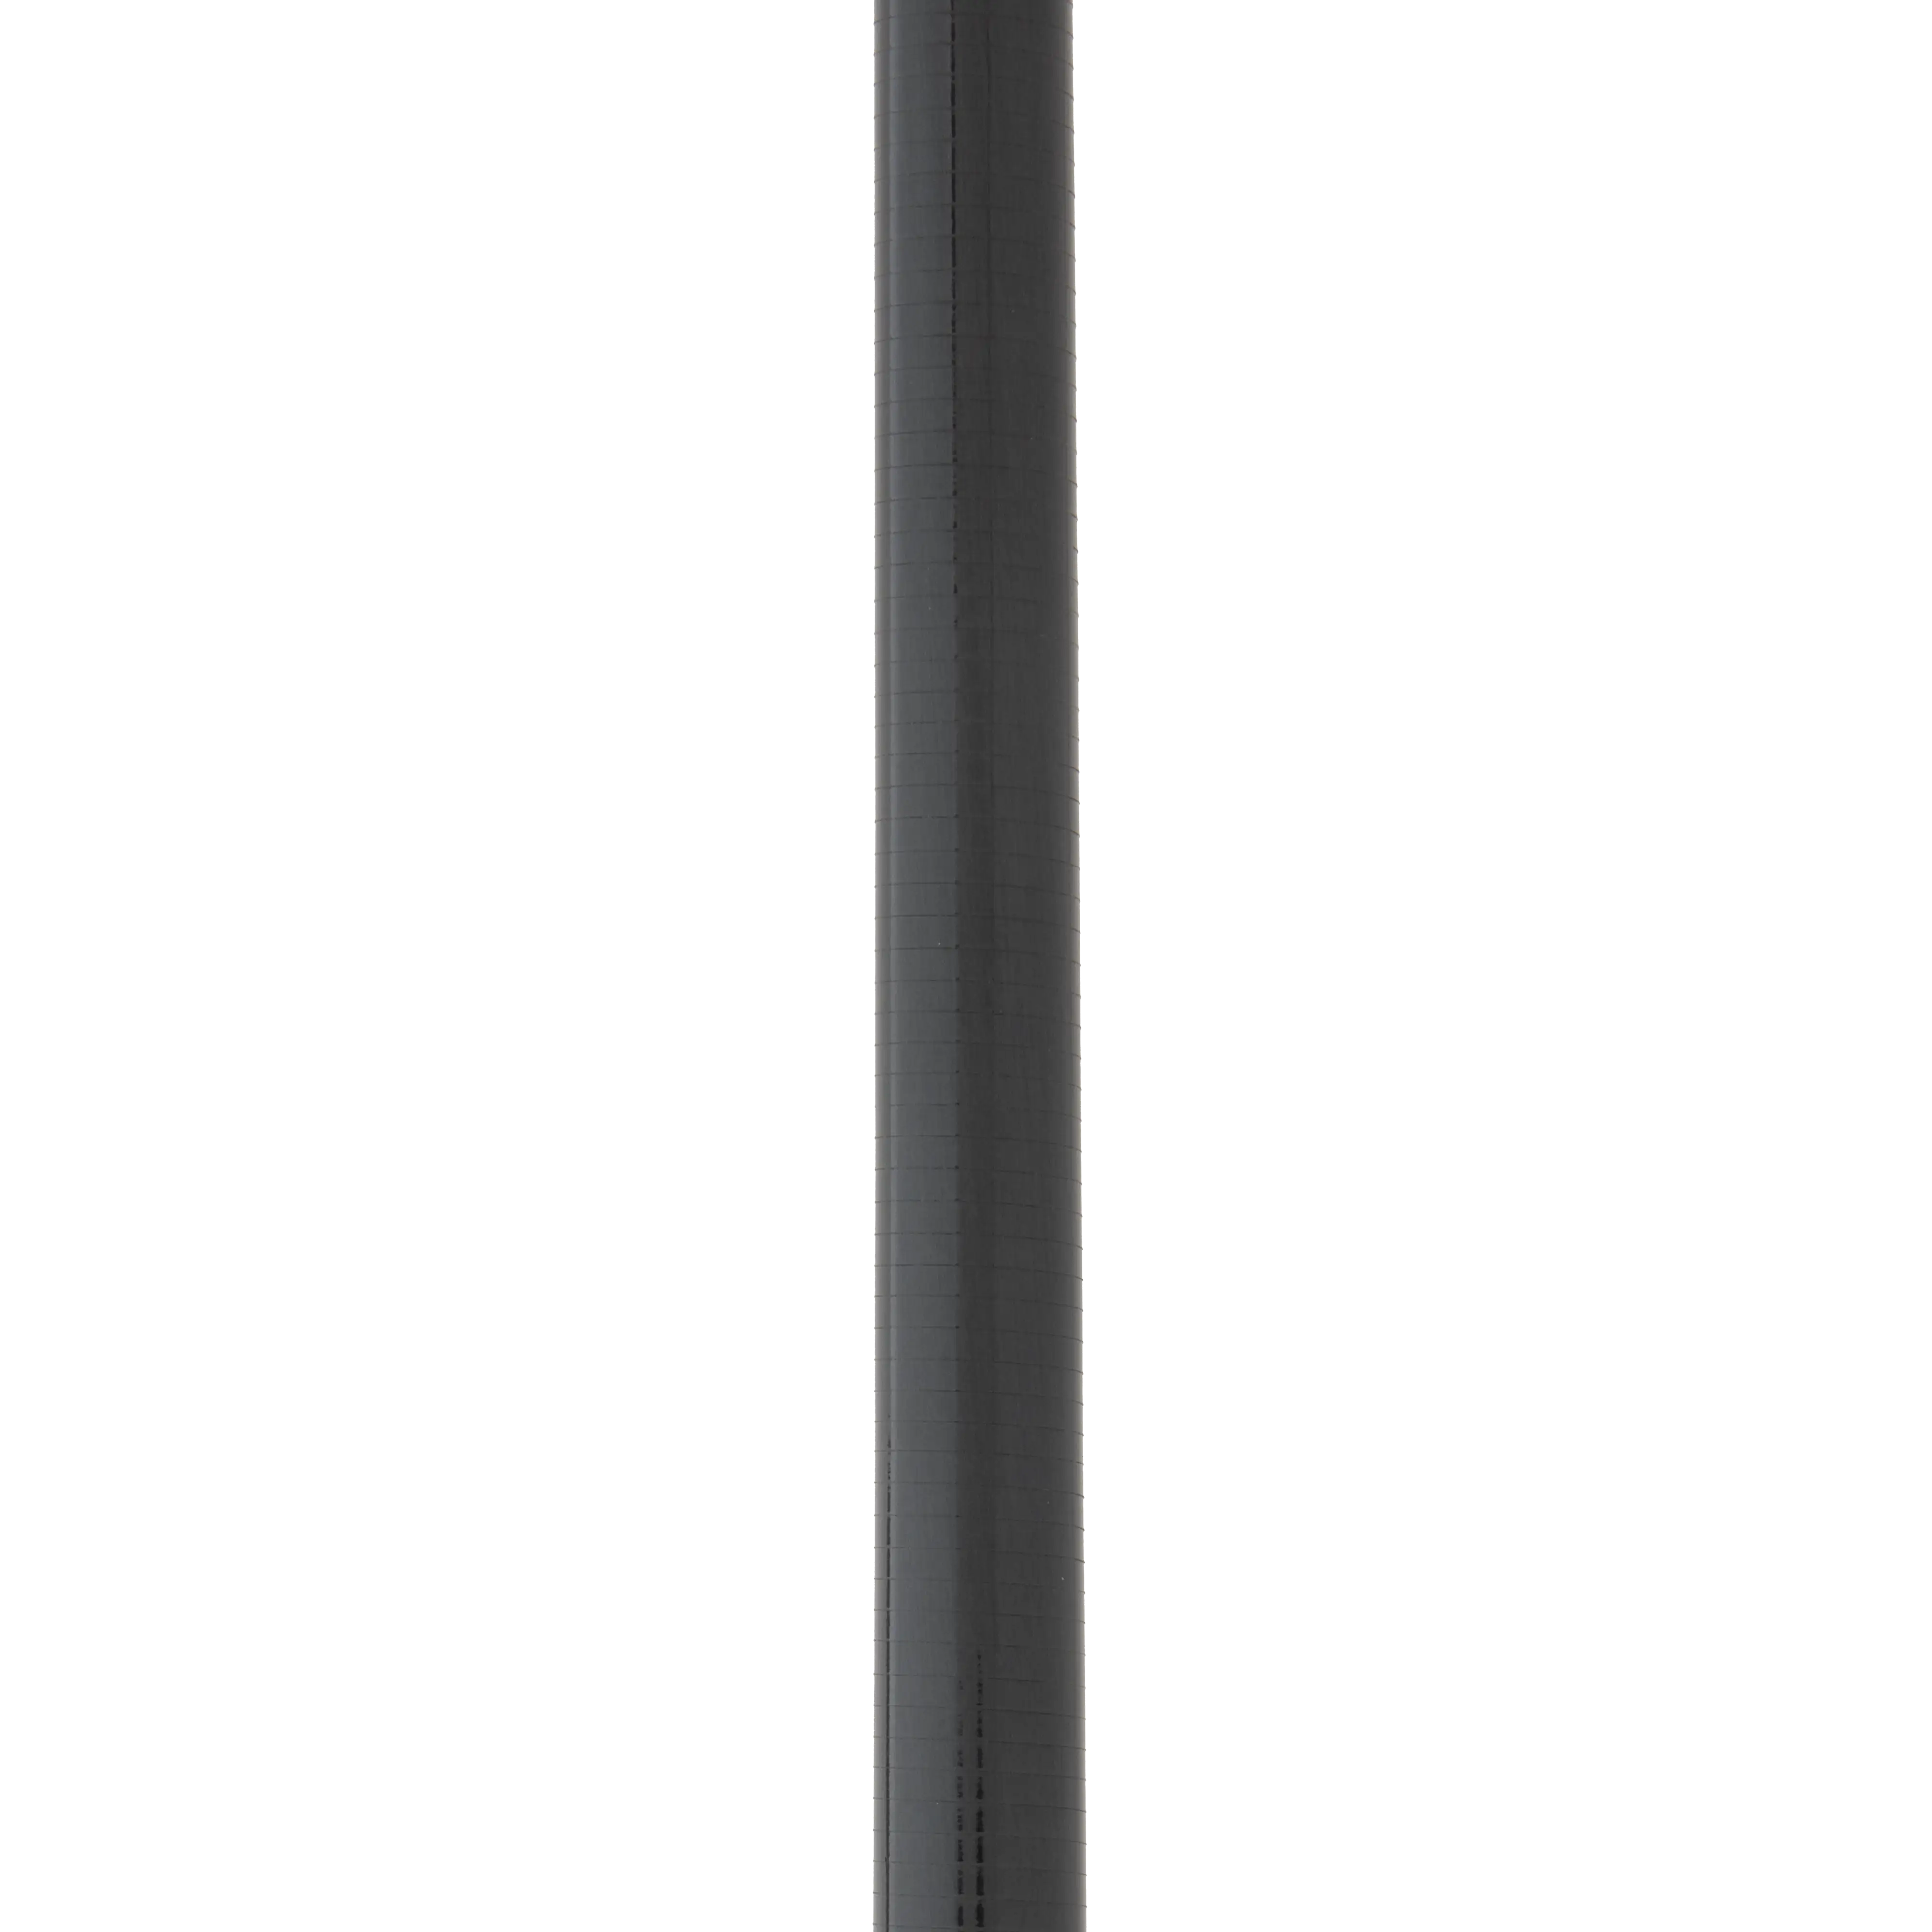 Cashion CR6r Carbon Fiber Rod Blanks